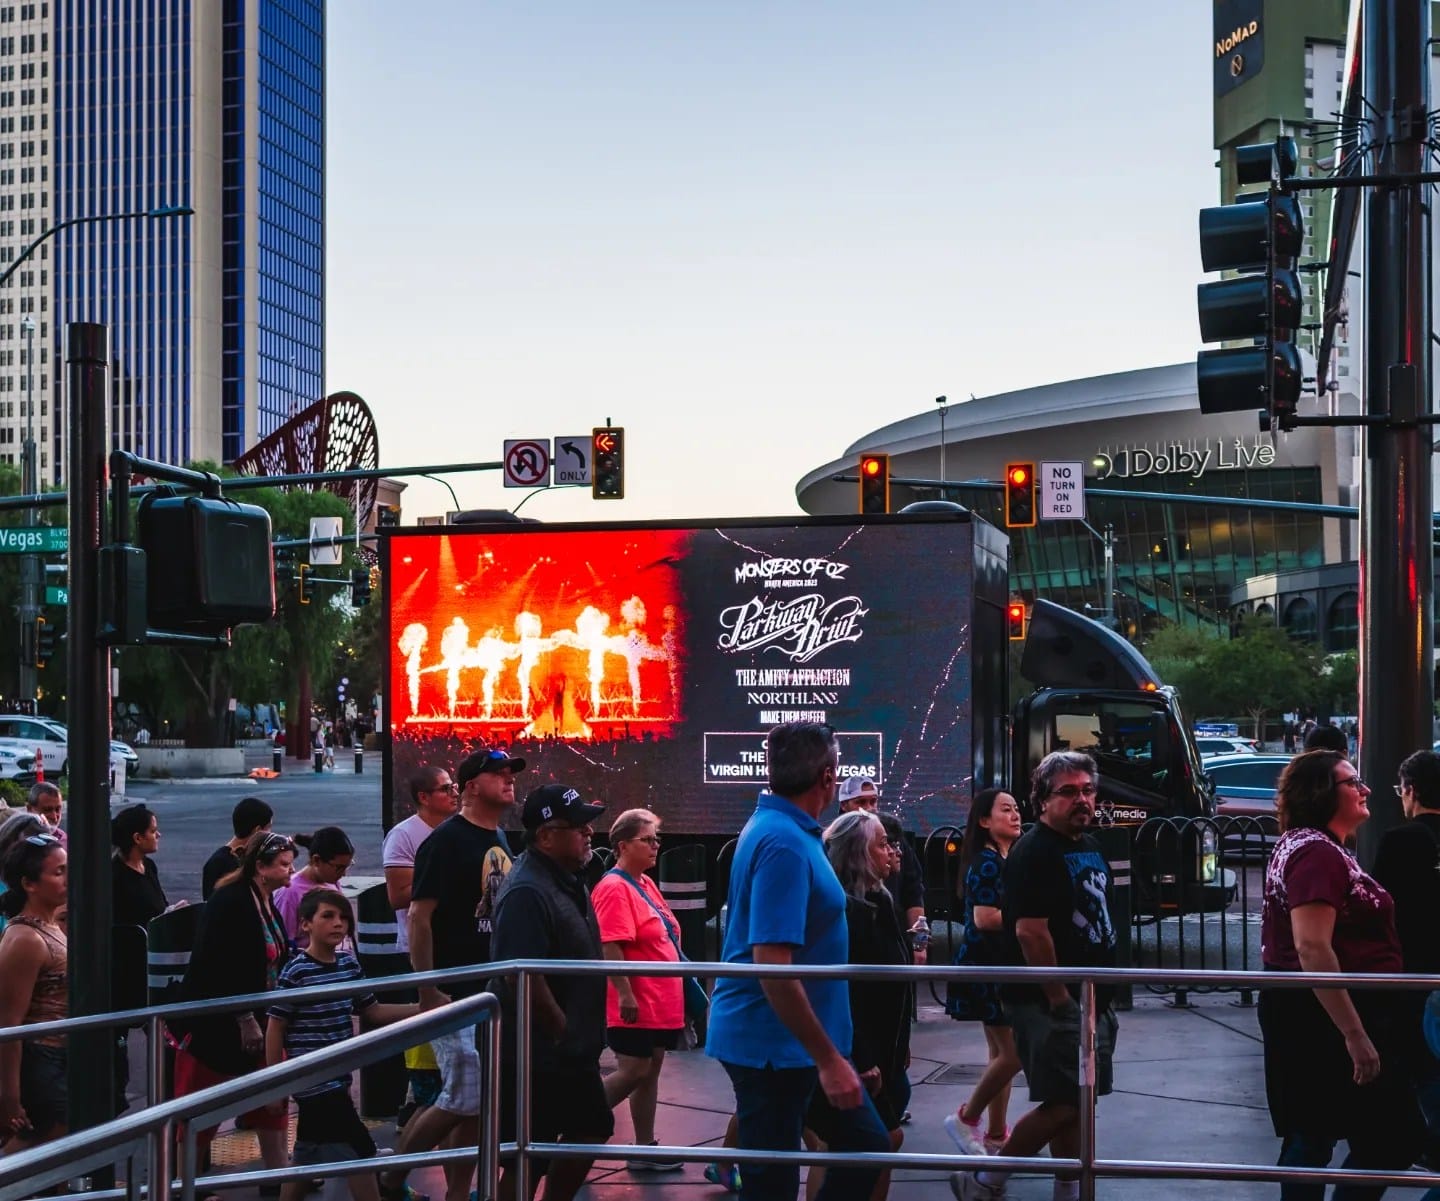 Crowd near billboard in busy city at twilight.